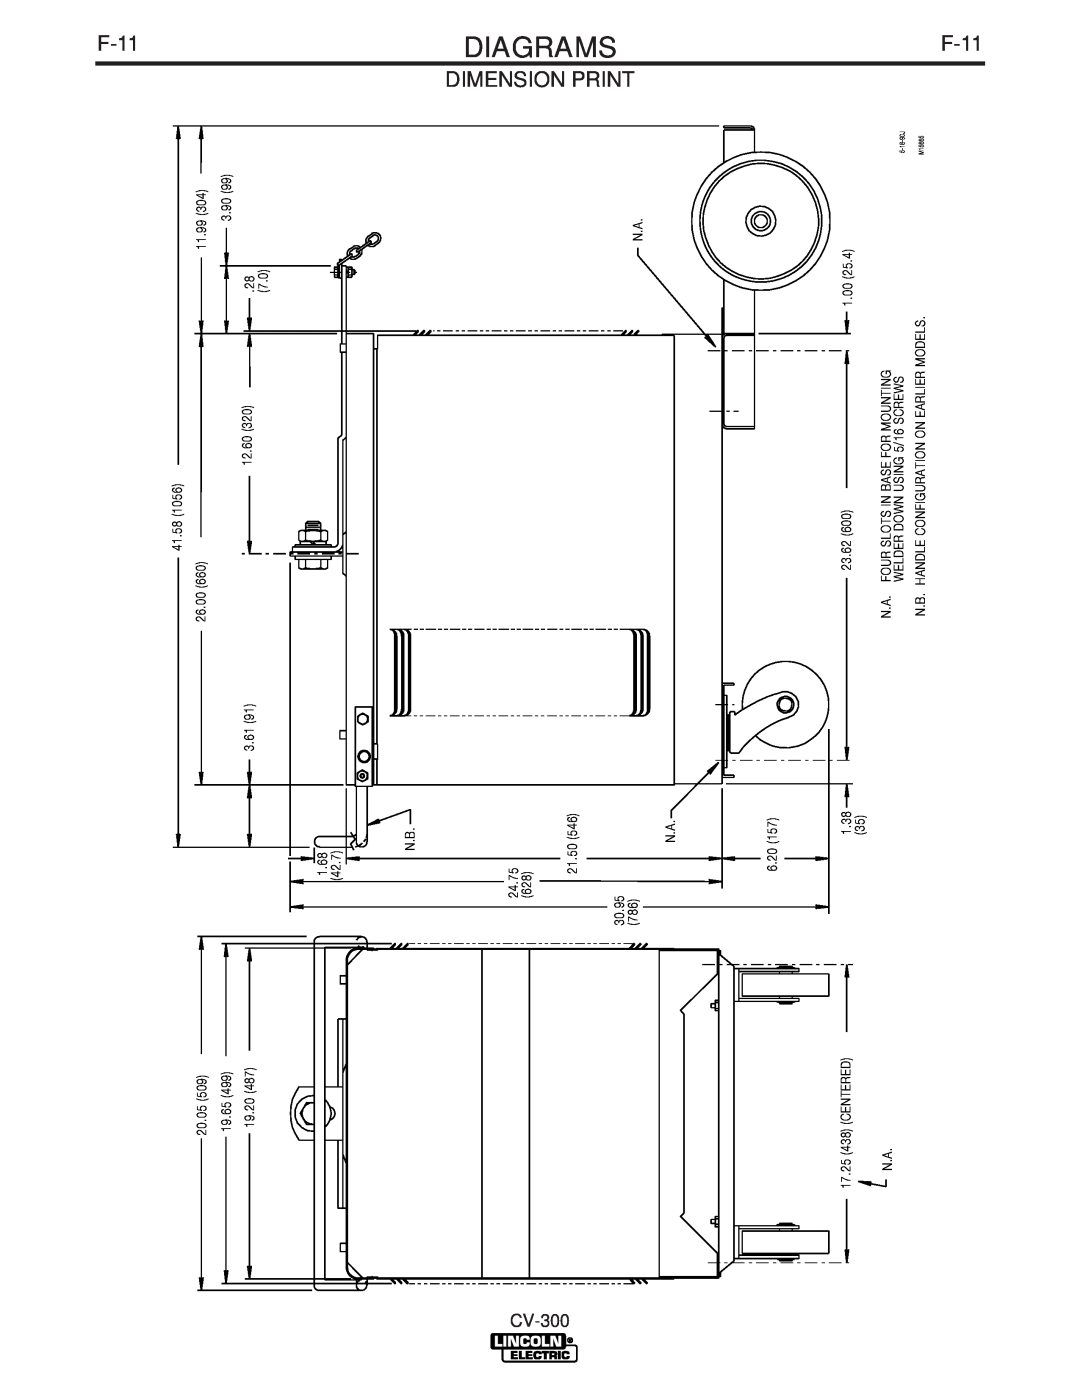 Lincoln Electric CV-300 manual F-11, Dimension Print 